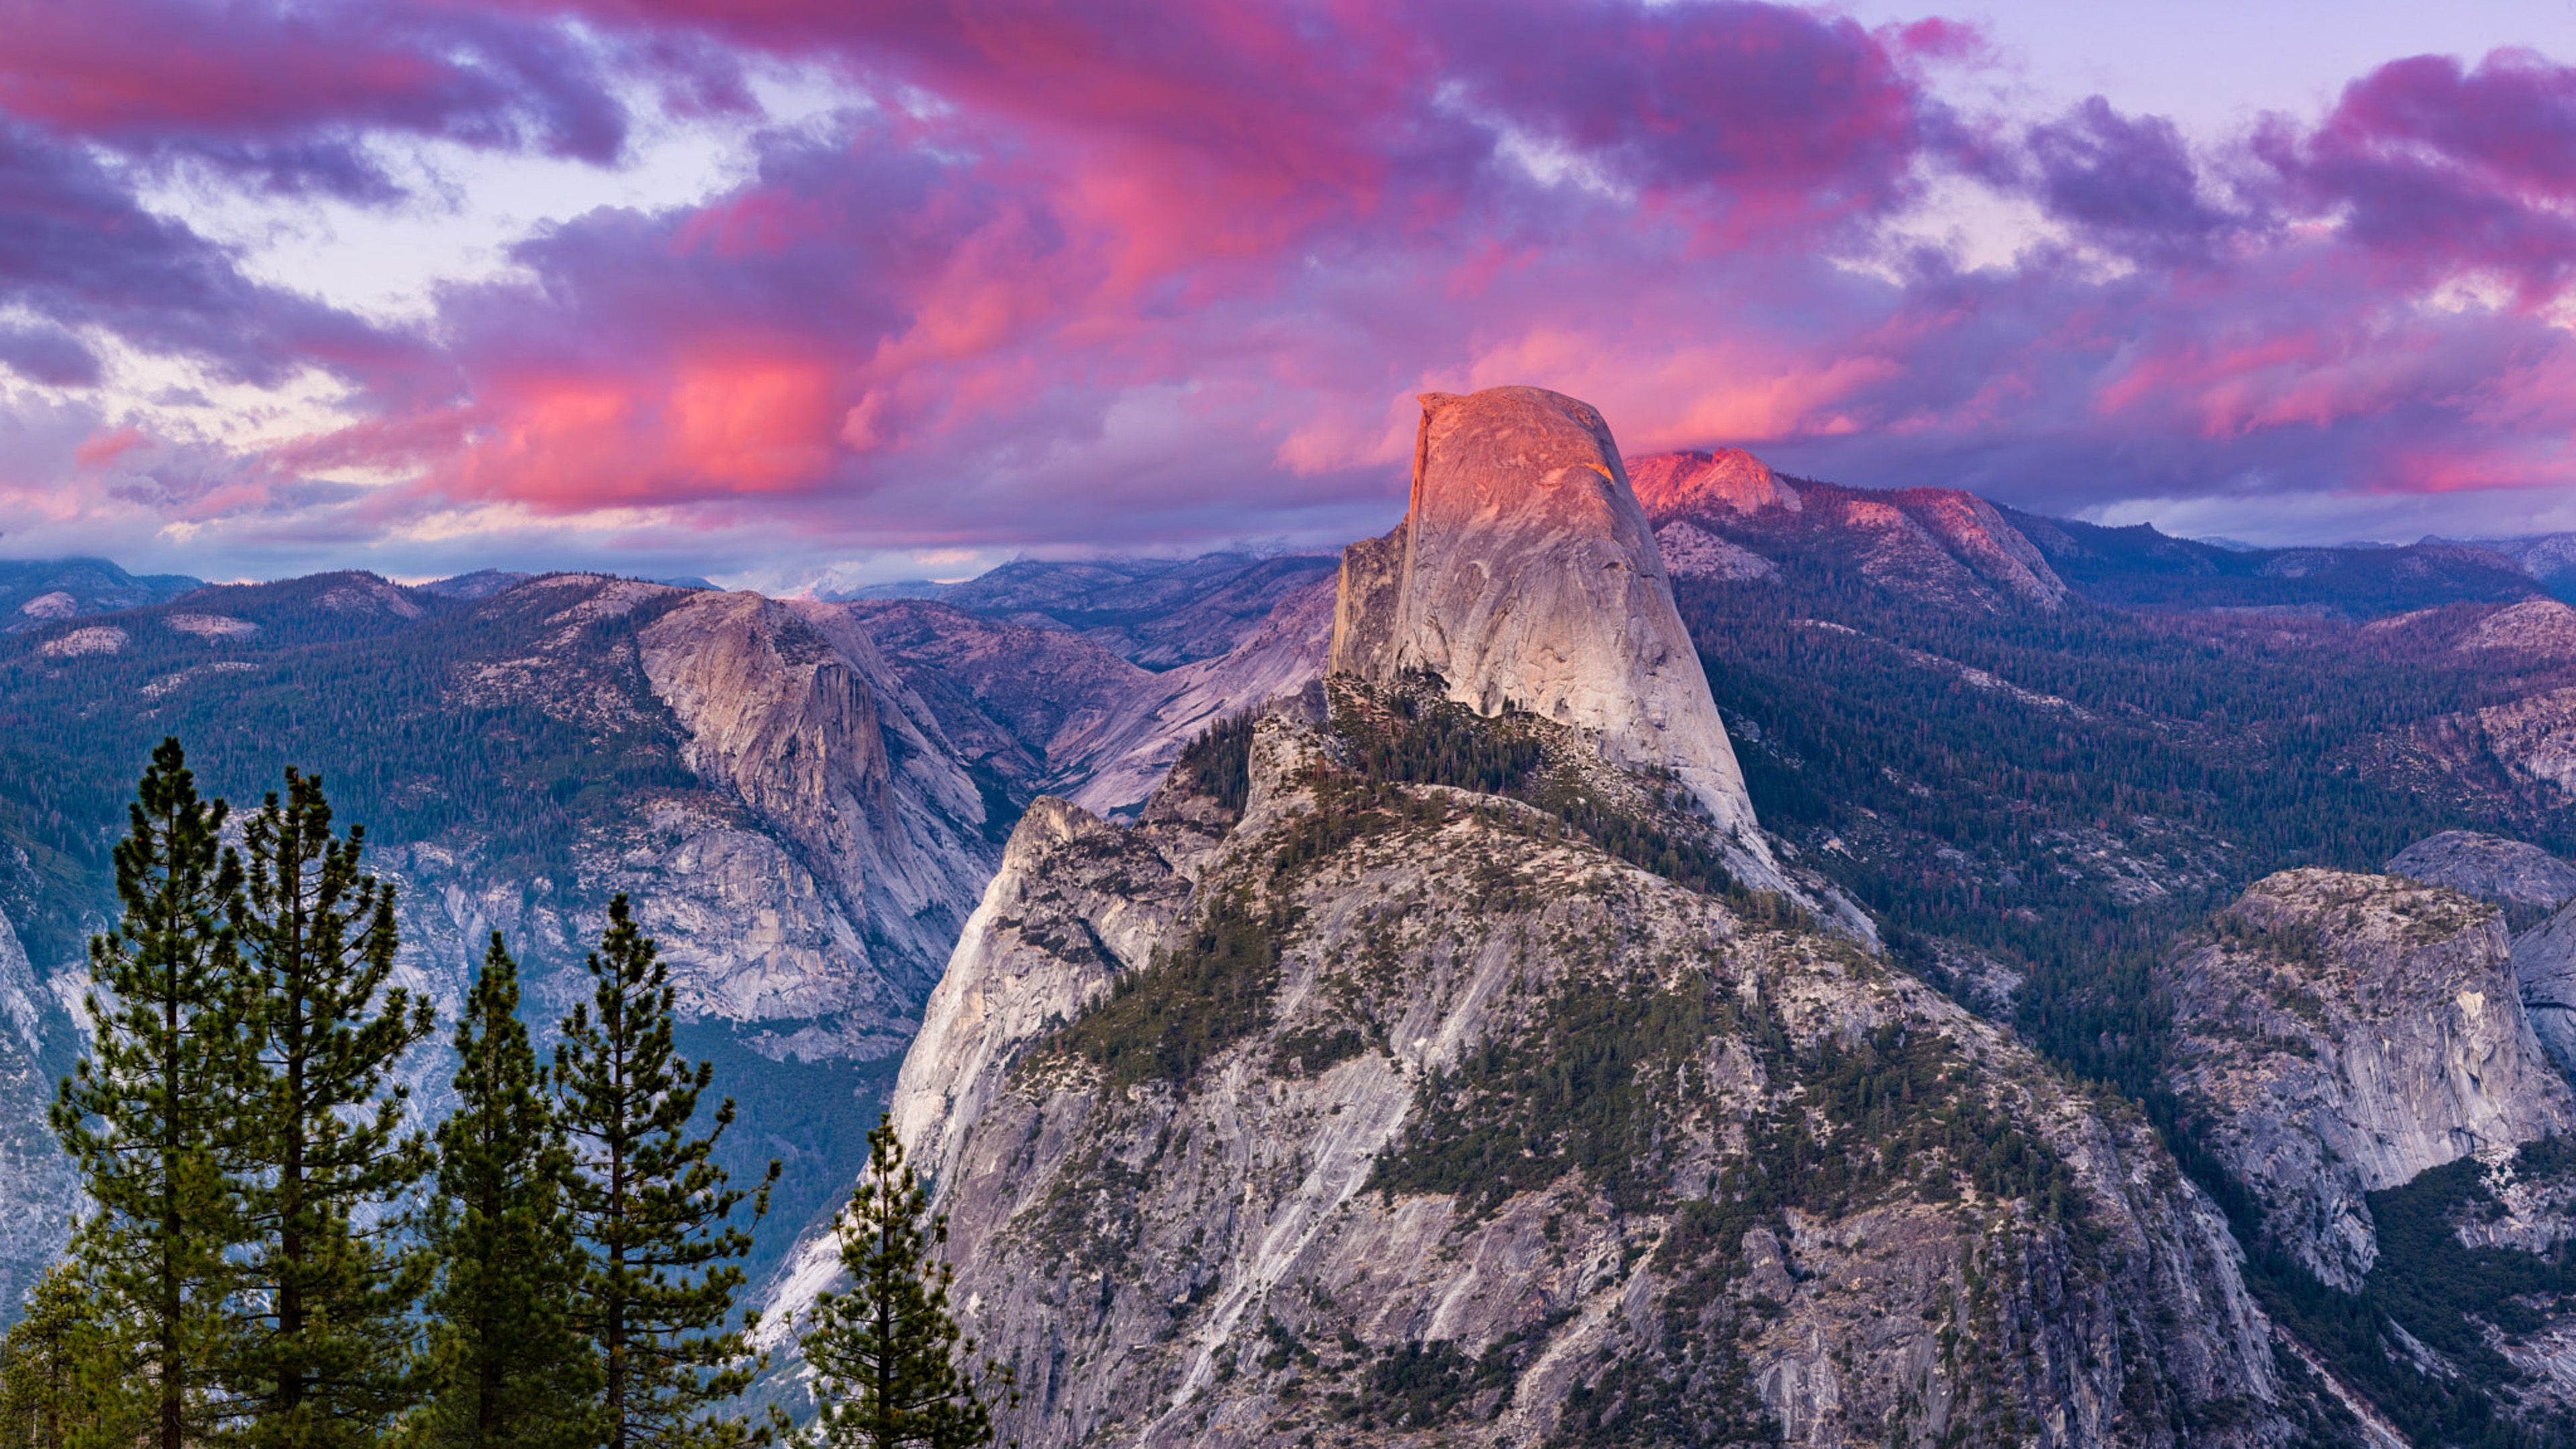 Half Dome Granite Dome In California Yosemite National Park Usa Best HD Wallpaper For Desktop Tablets And Mobile Phones3840x2160, Wallpaper13.com